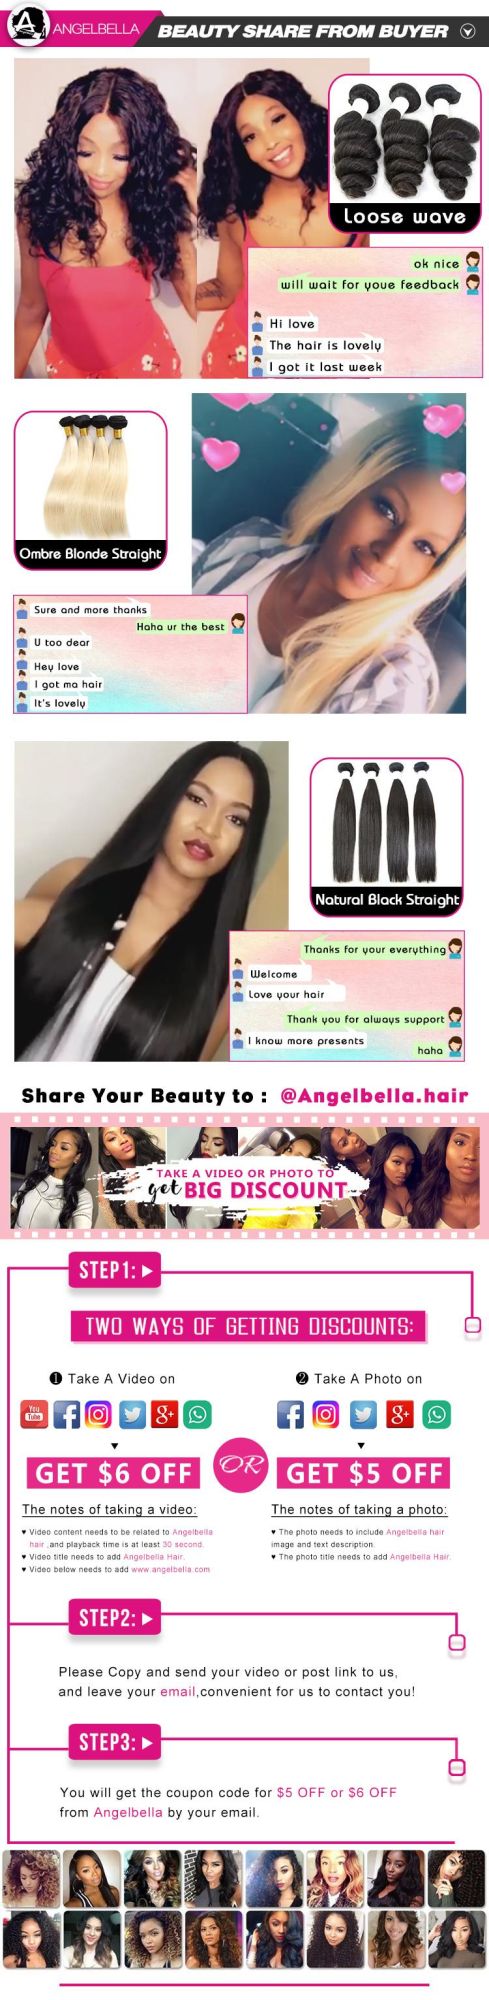 Angelbella Virgin Brazilian Hair Bundles 1b# Spring Funmi Hair Weft